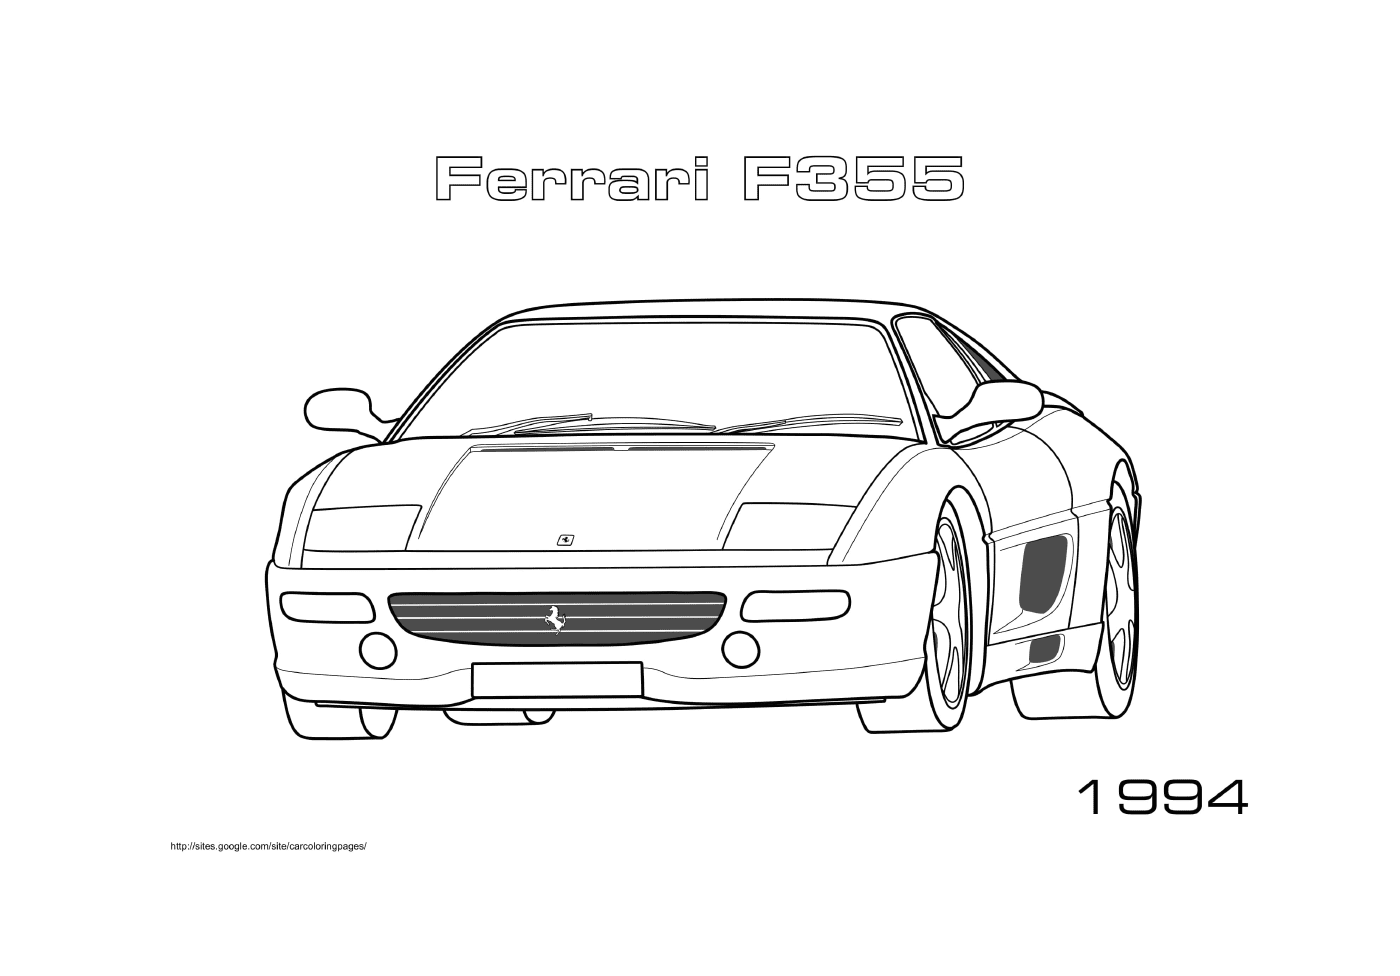  Ferrari F355 of 1994 